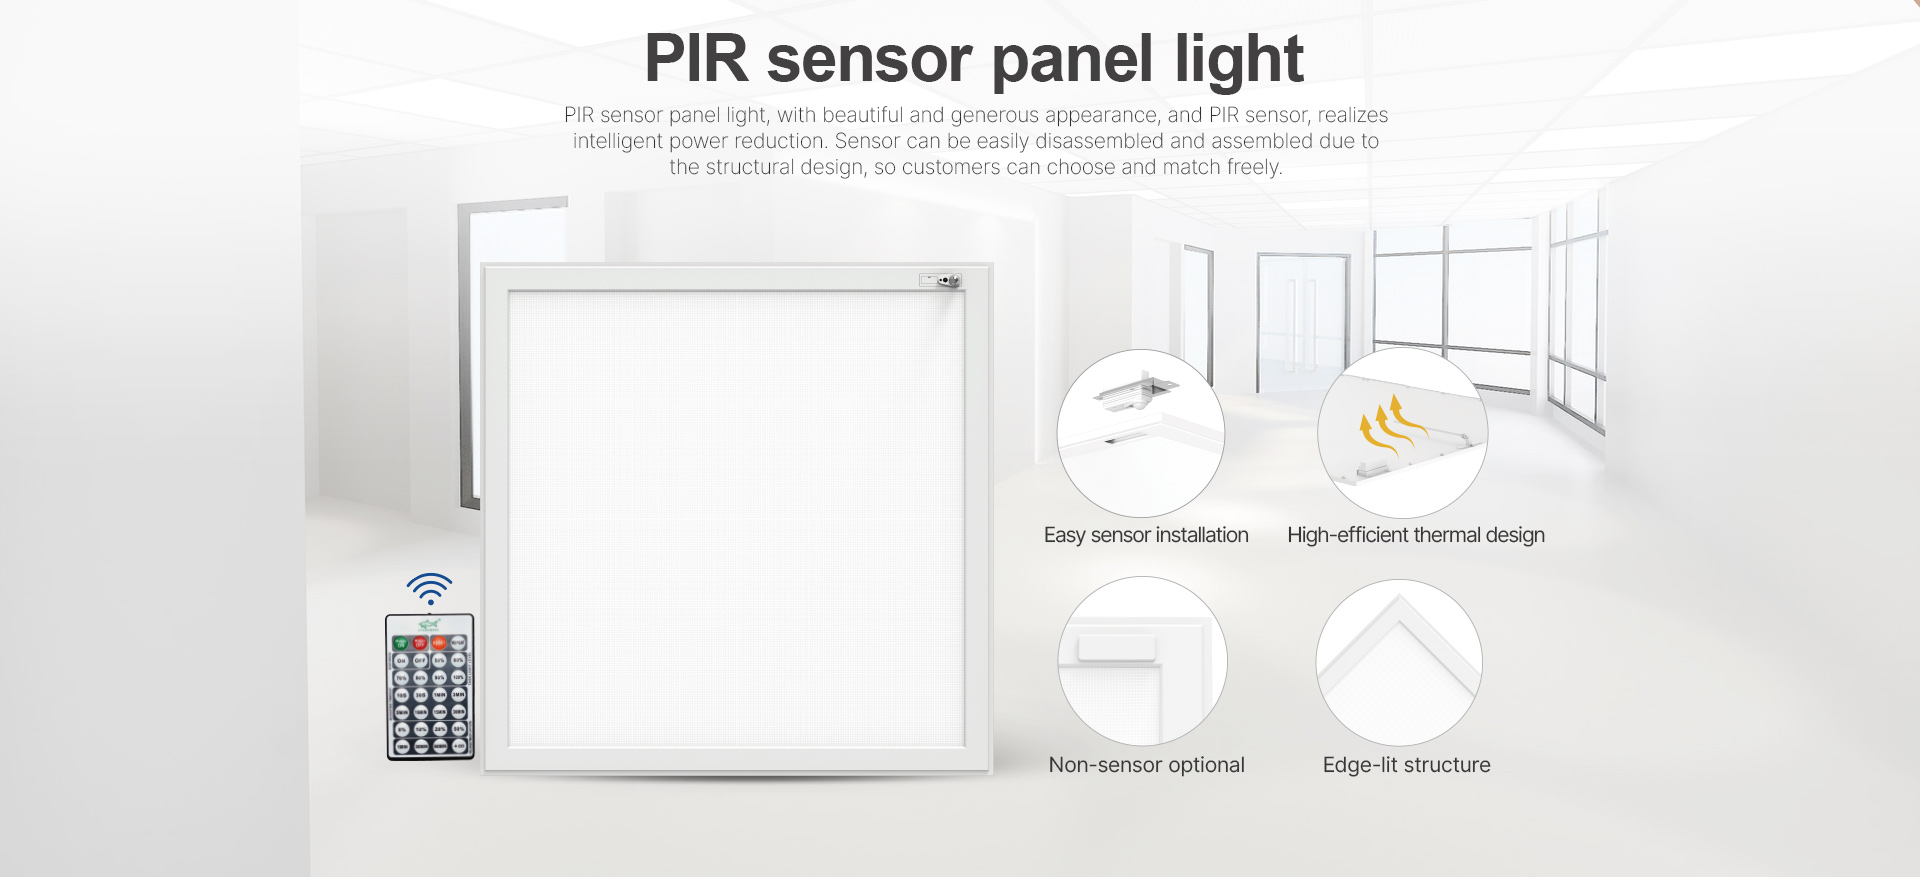 pir sensor panel light